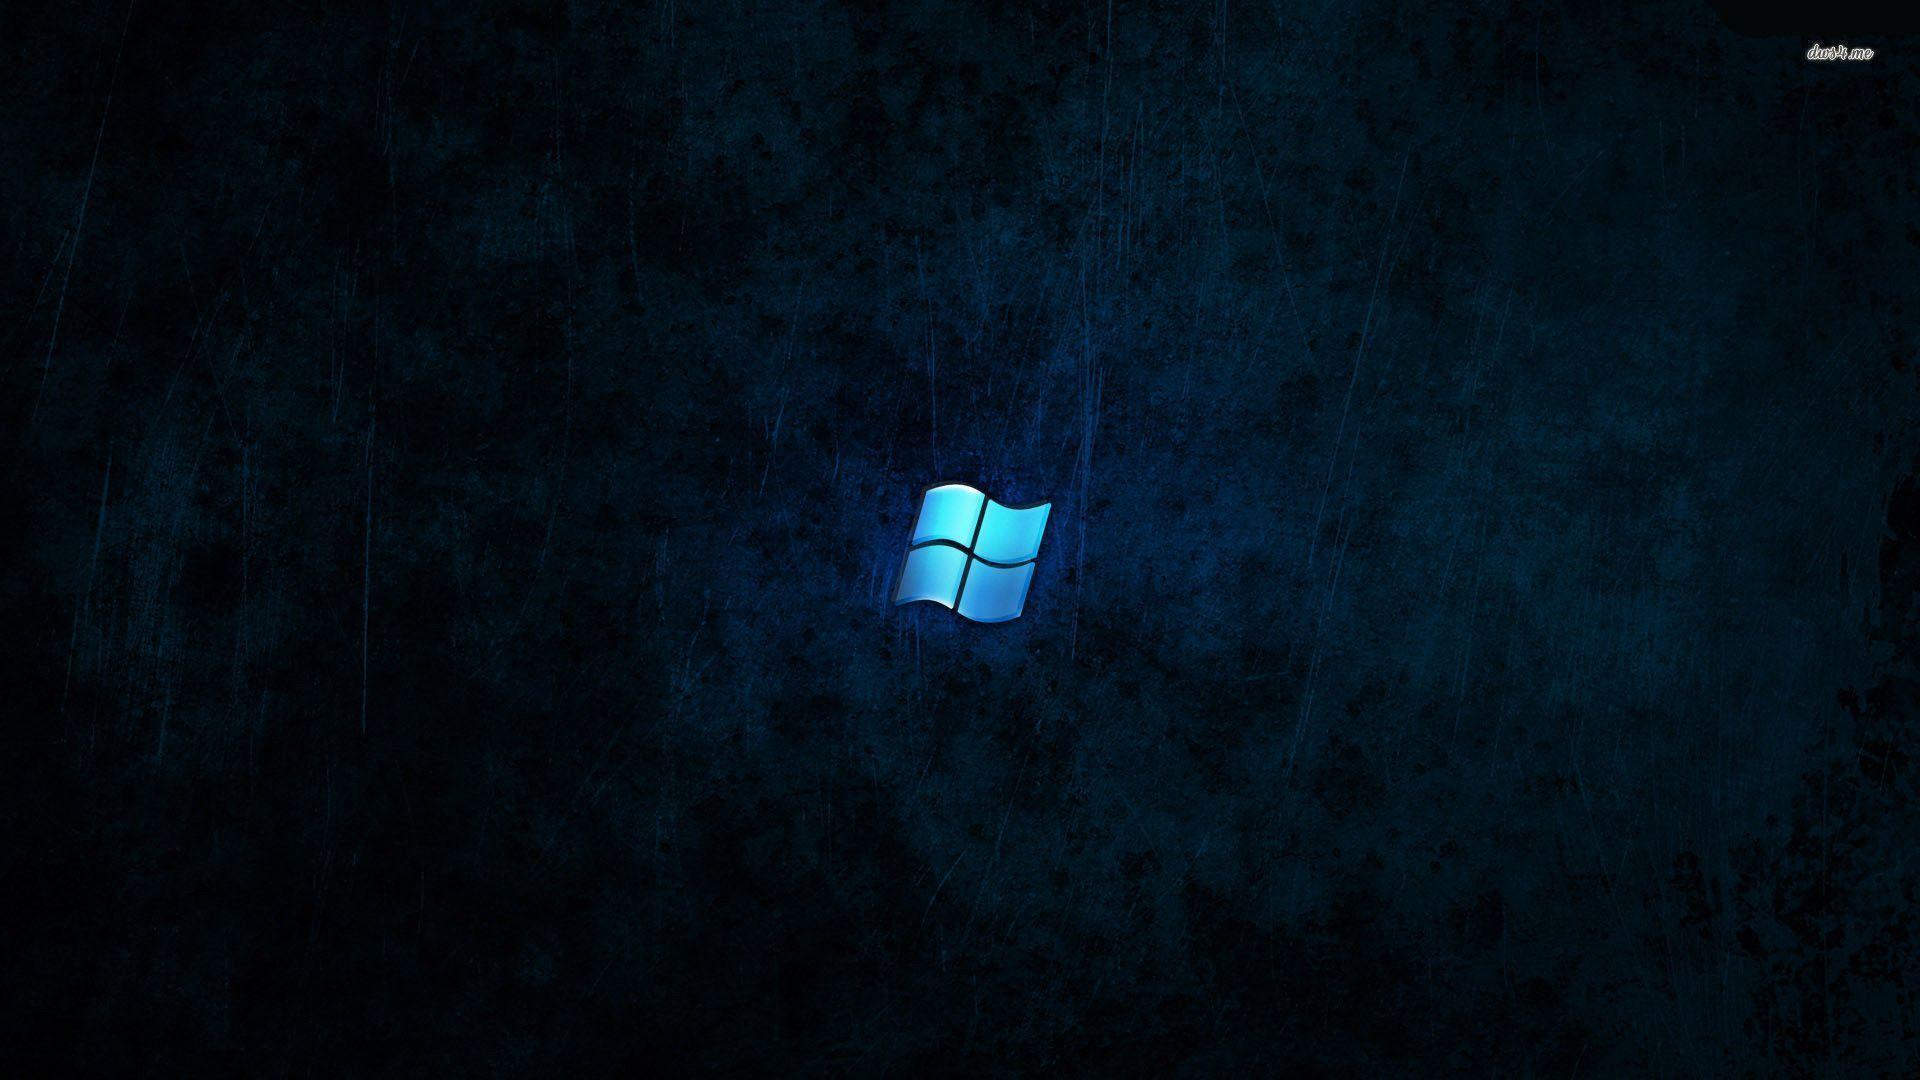 Blue Windows logo wallpapers